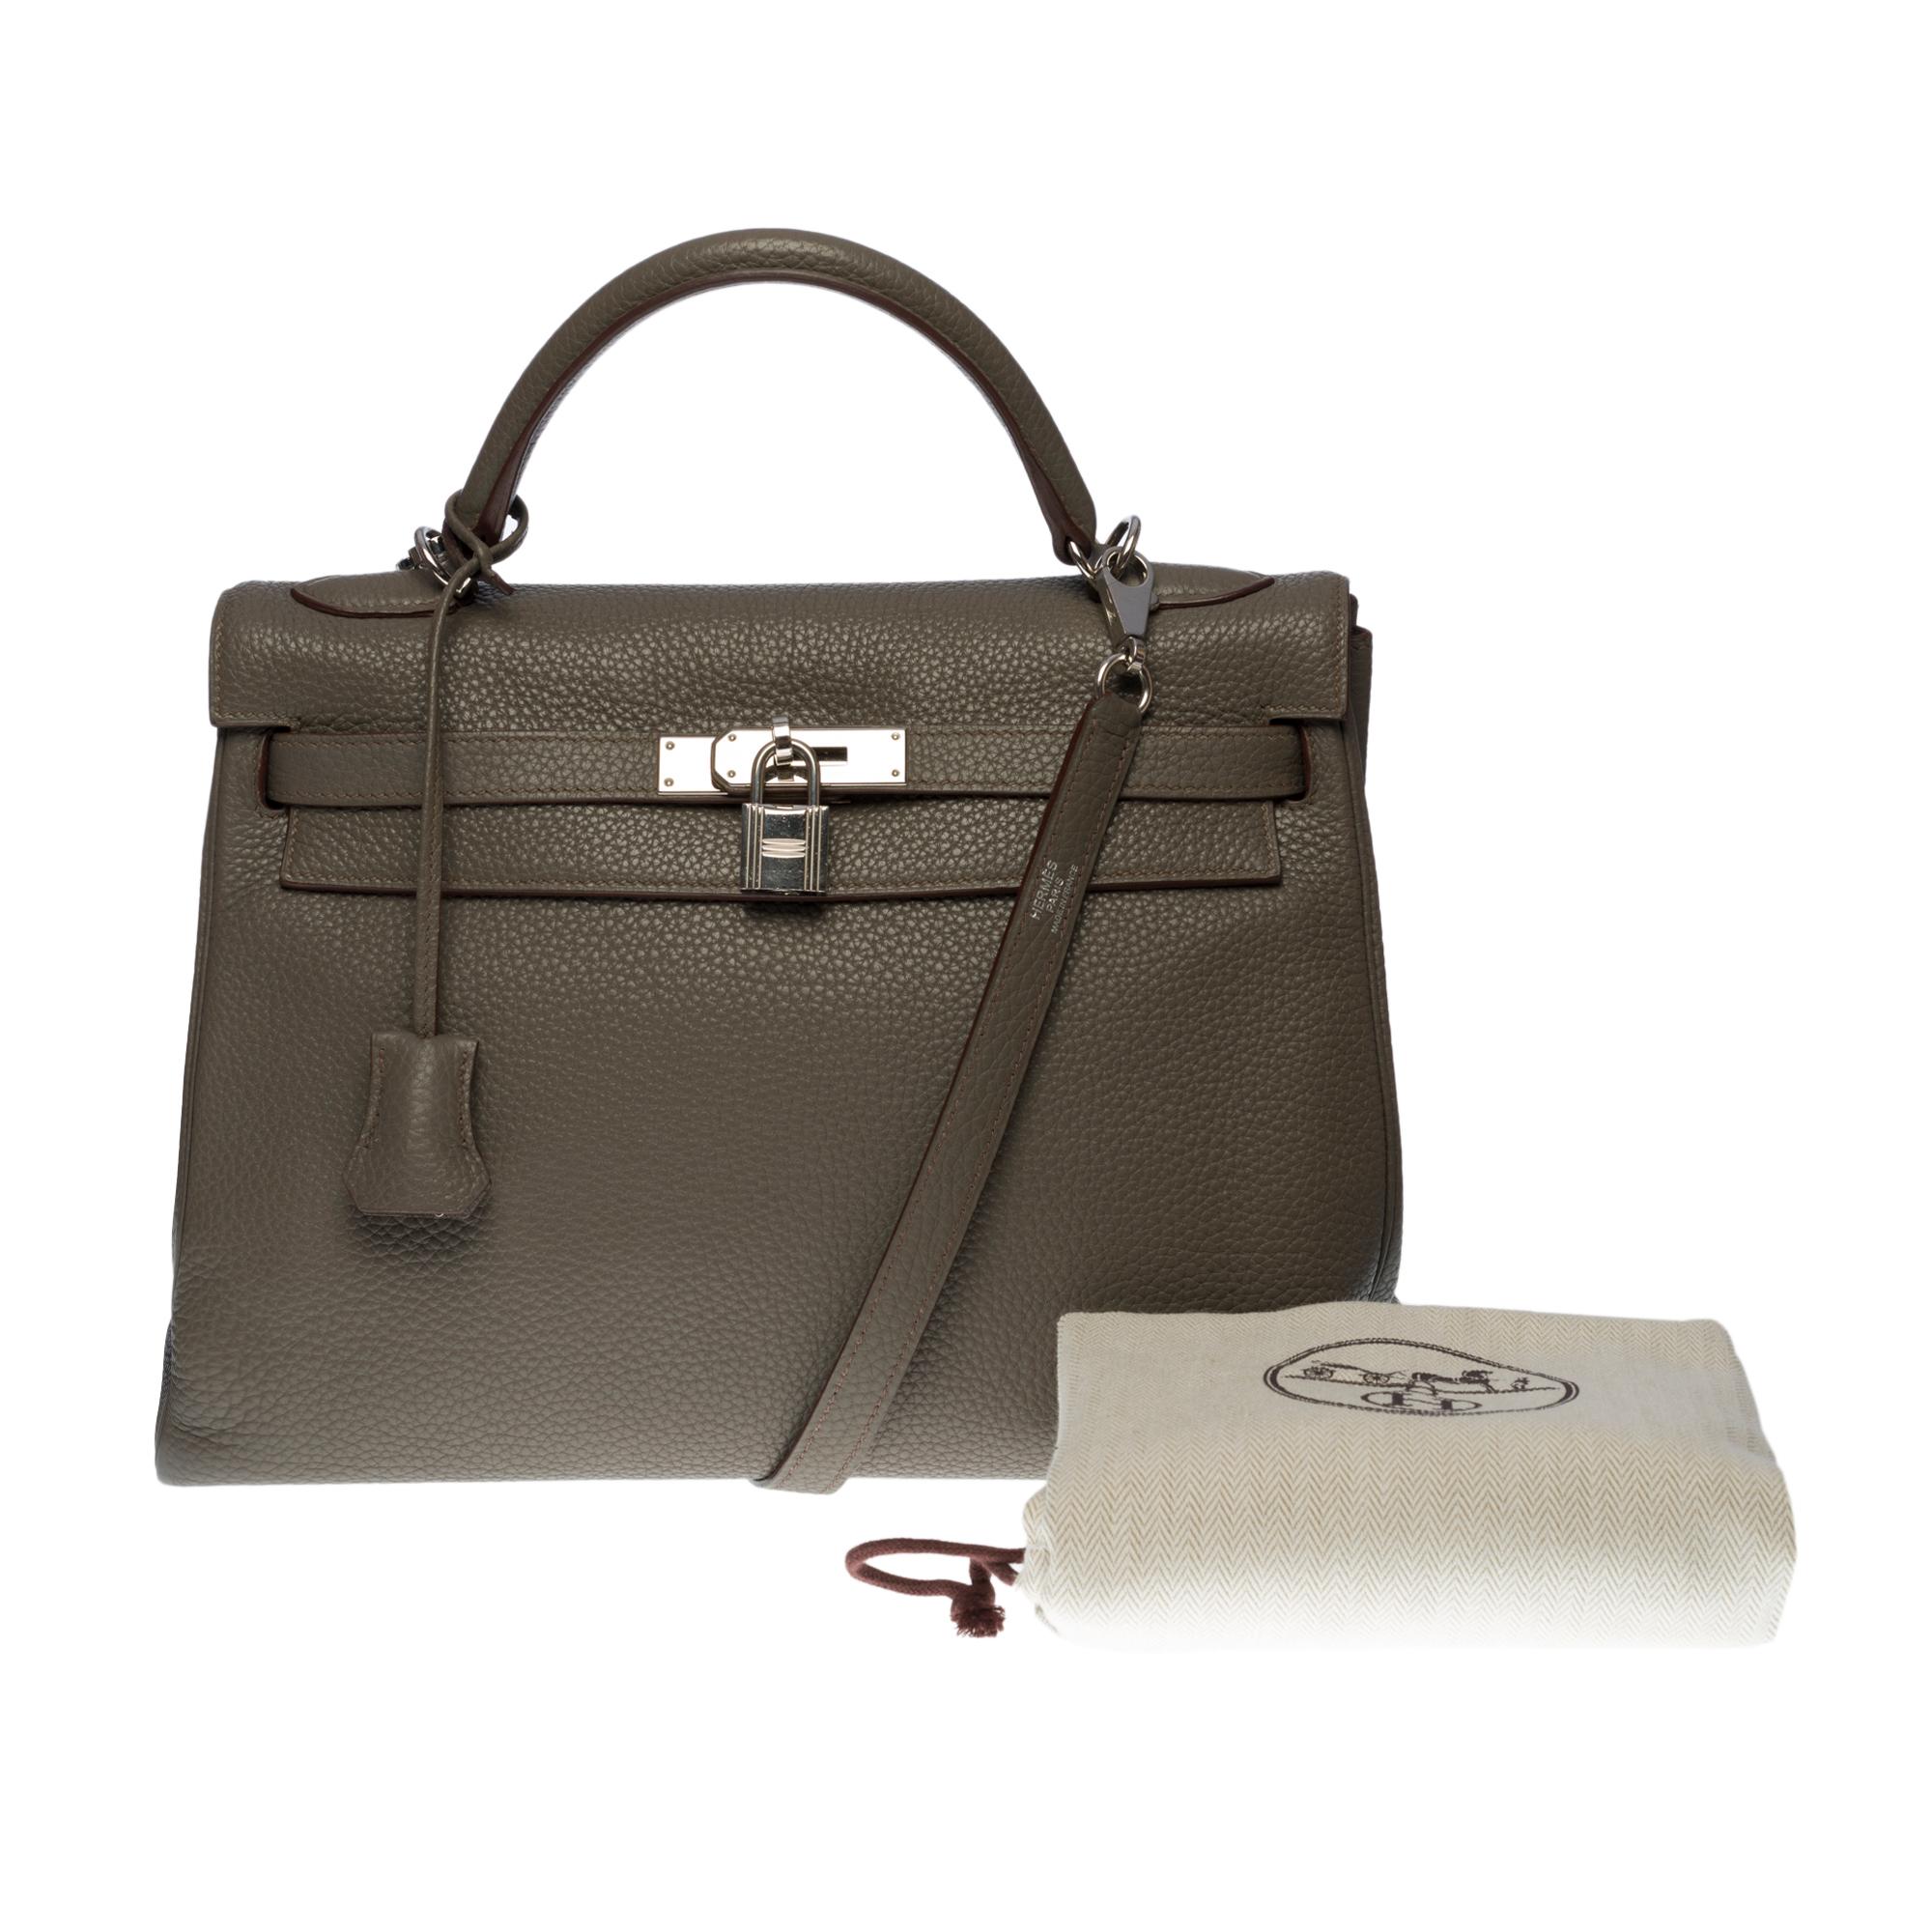 Exquisite Hermès Kelly 32cm retourne handbag strap in Etain Togo leather, SHW 4